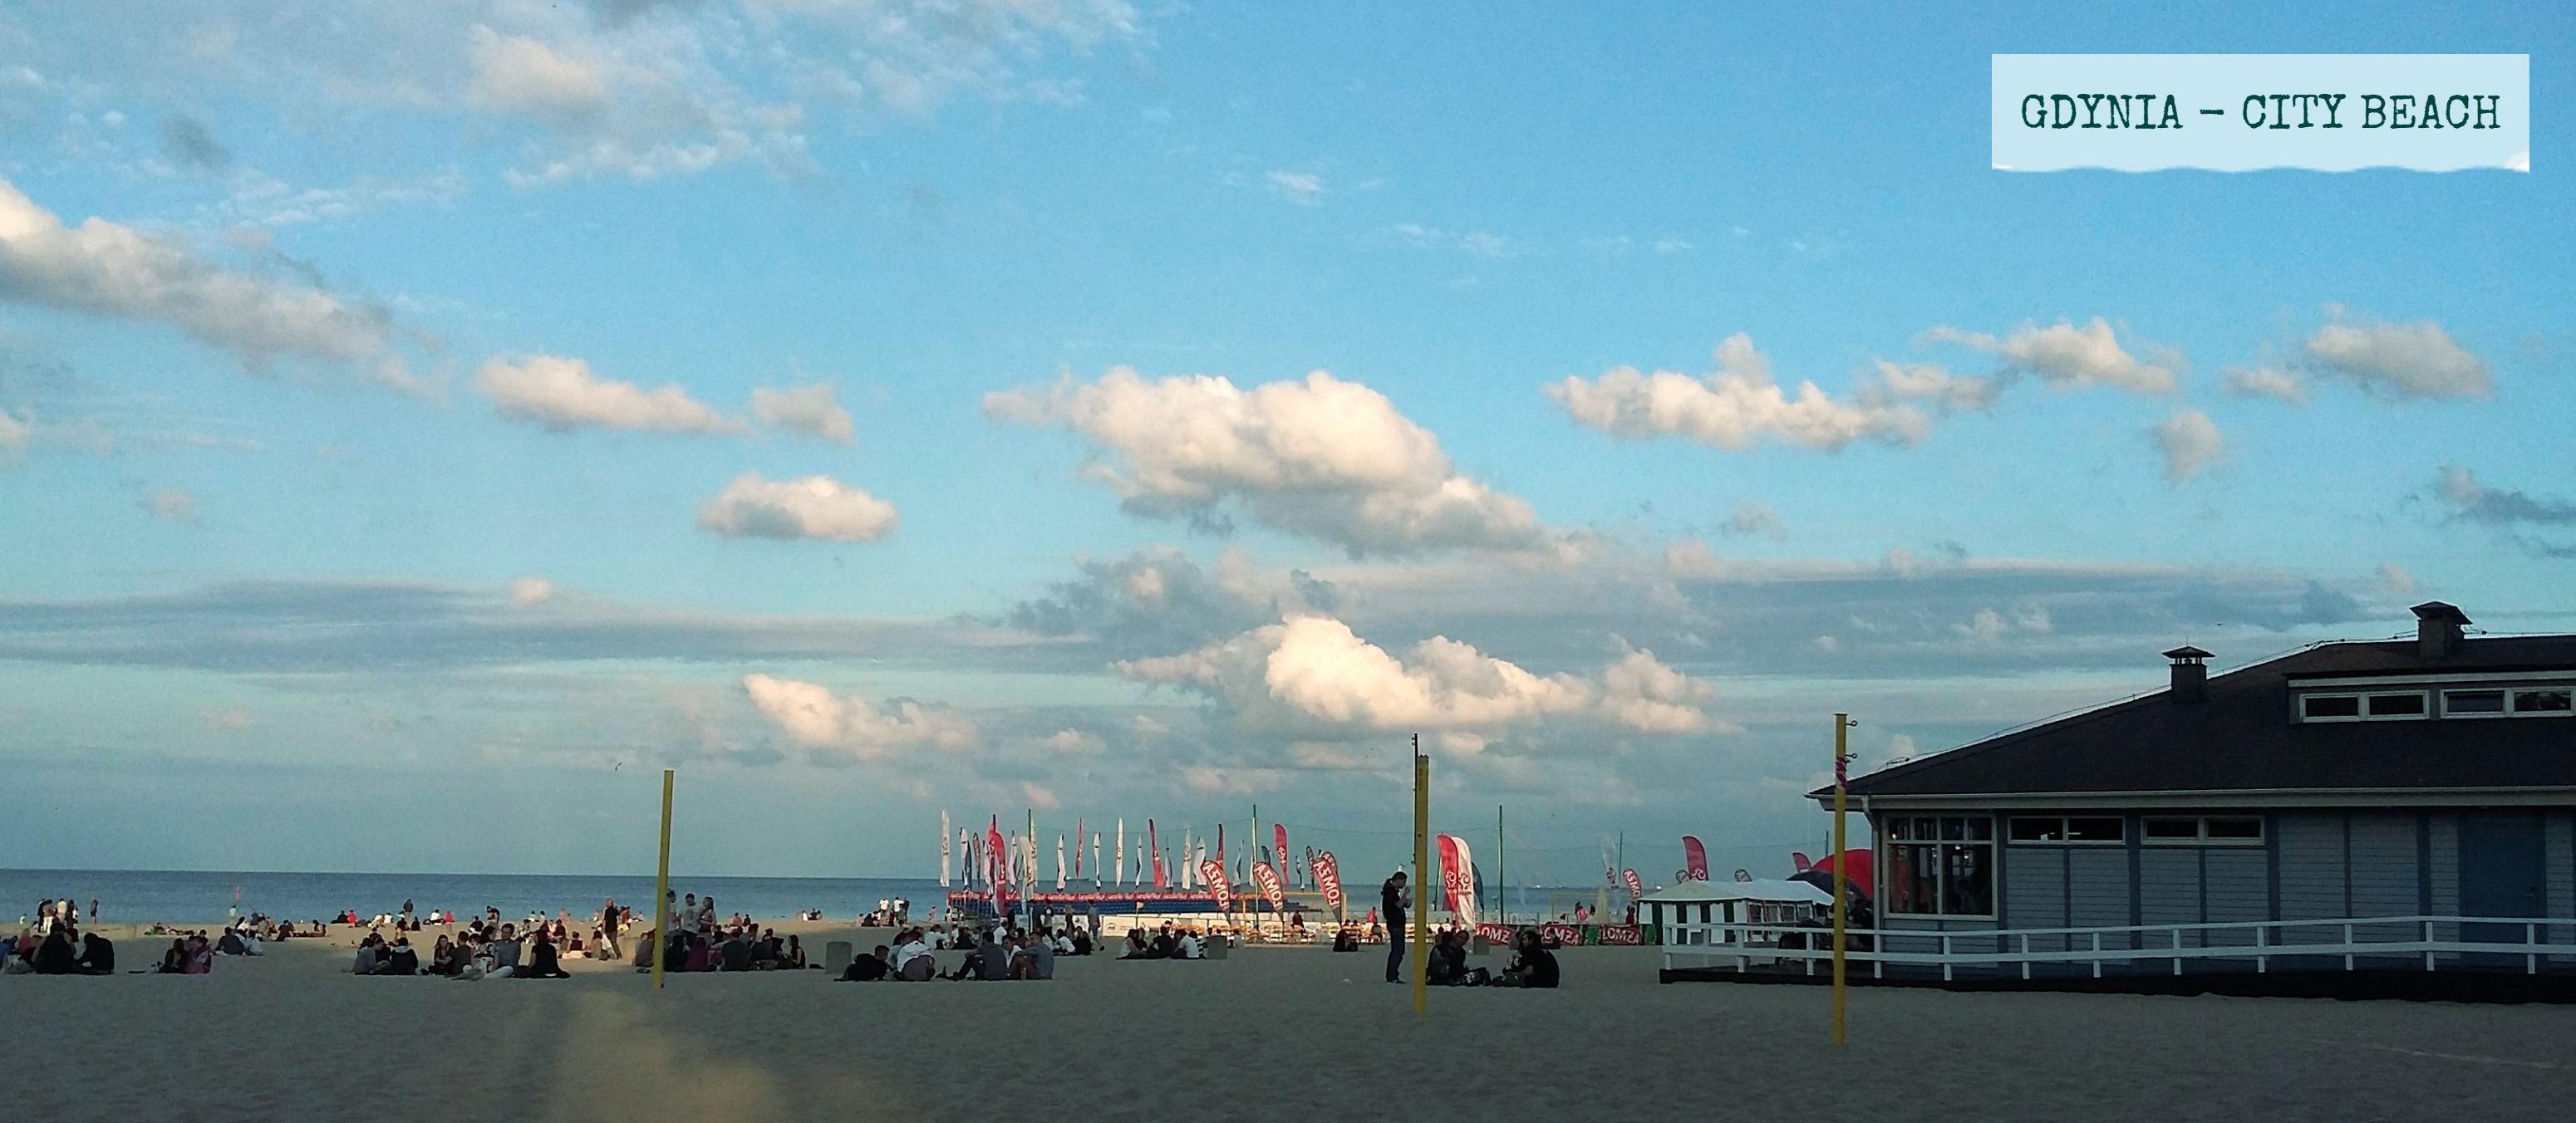 Gdynia beach.jpg